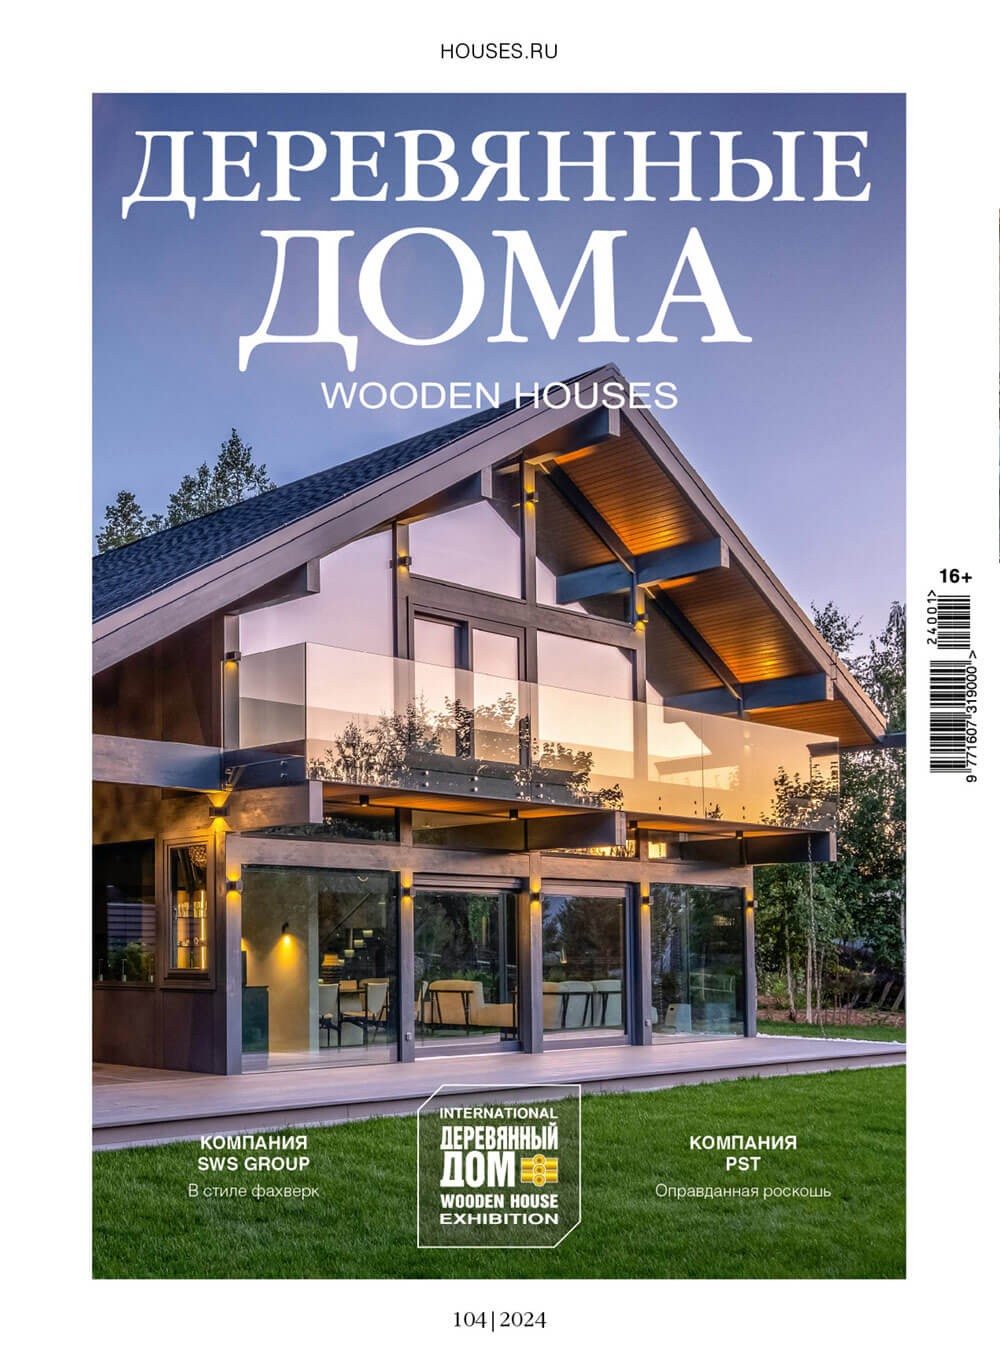 Wooden houses magazine